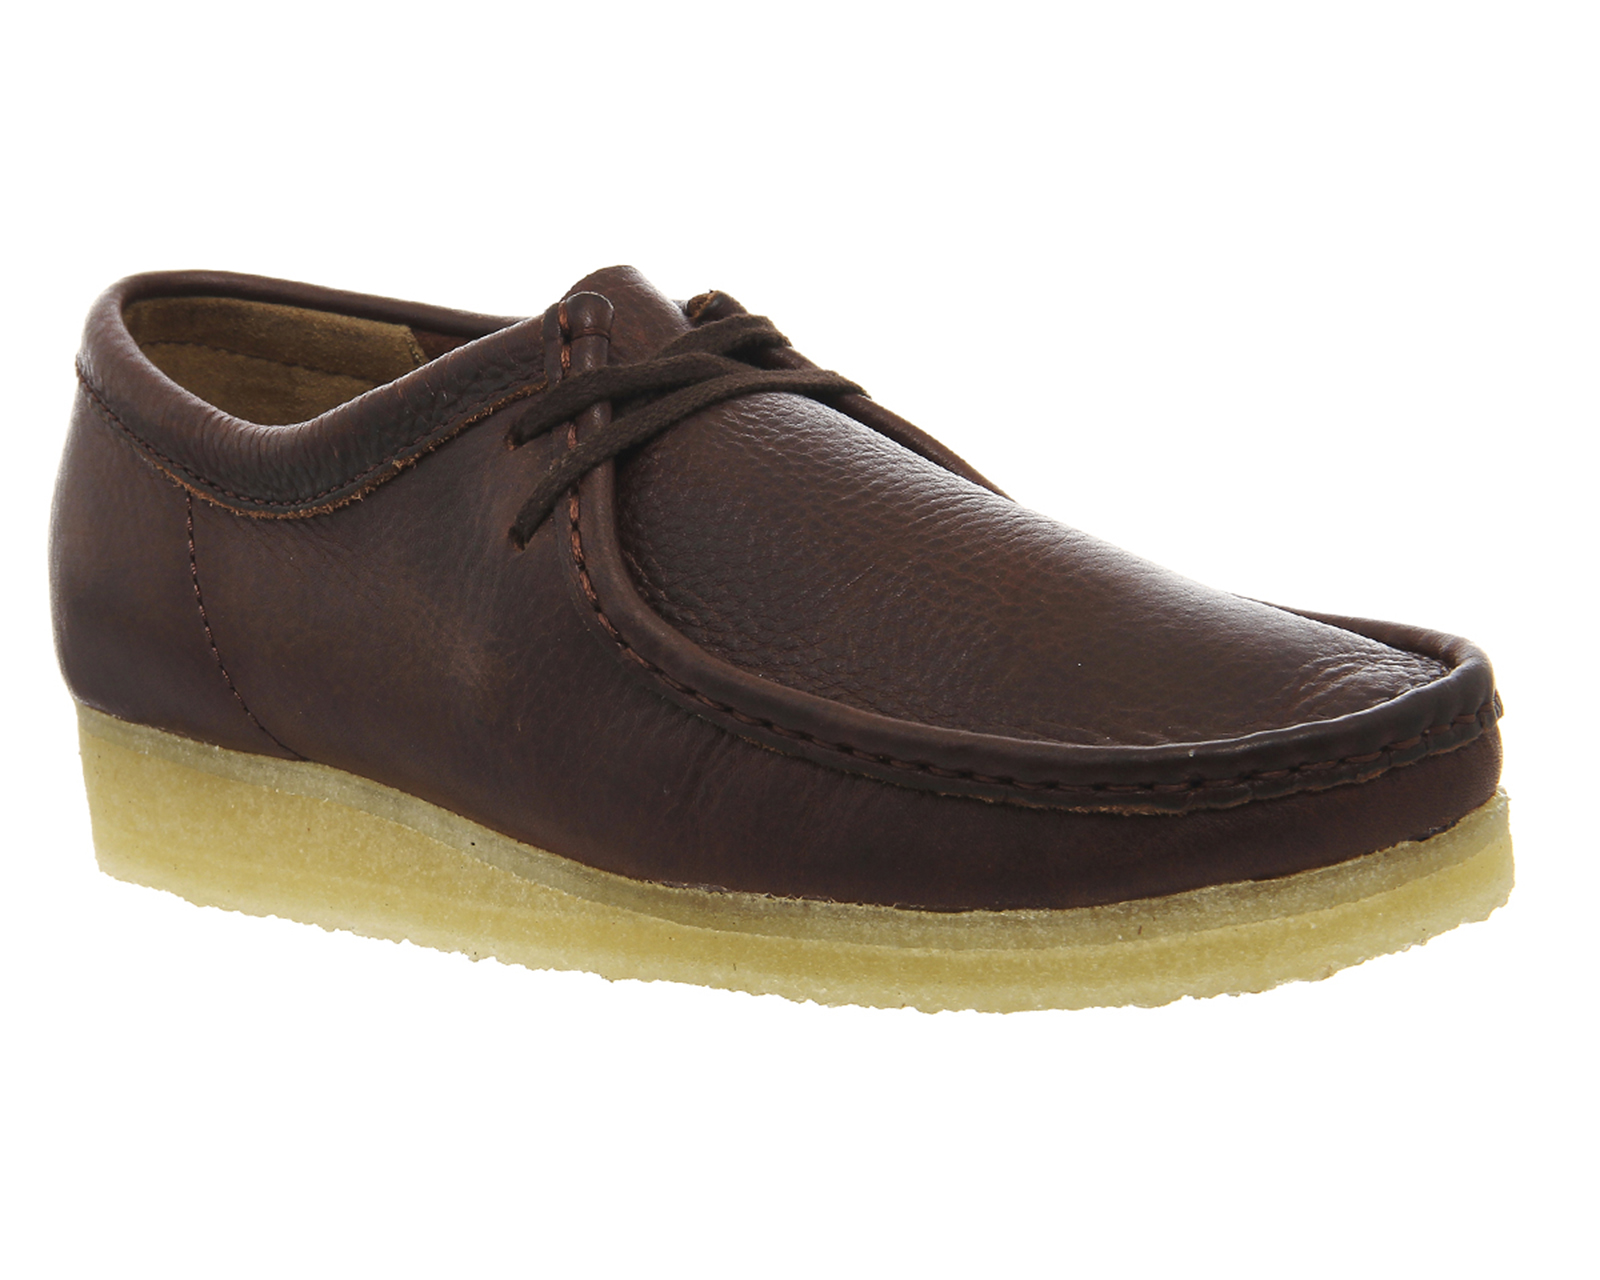 Clarks Originals Wallabee Shoes Brown 